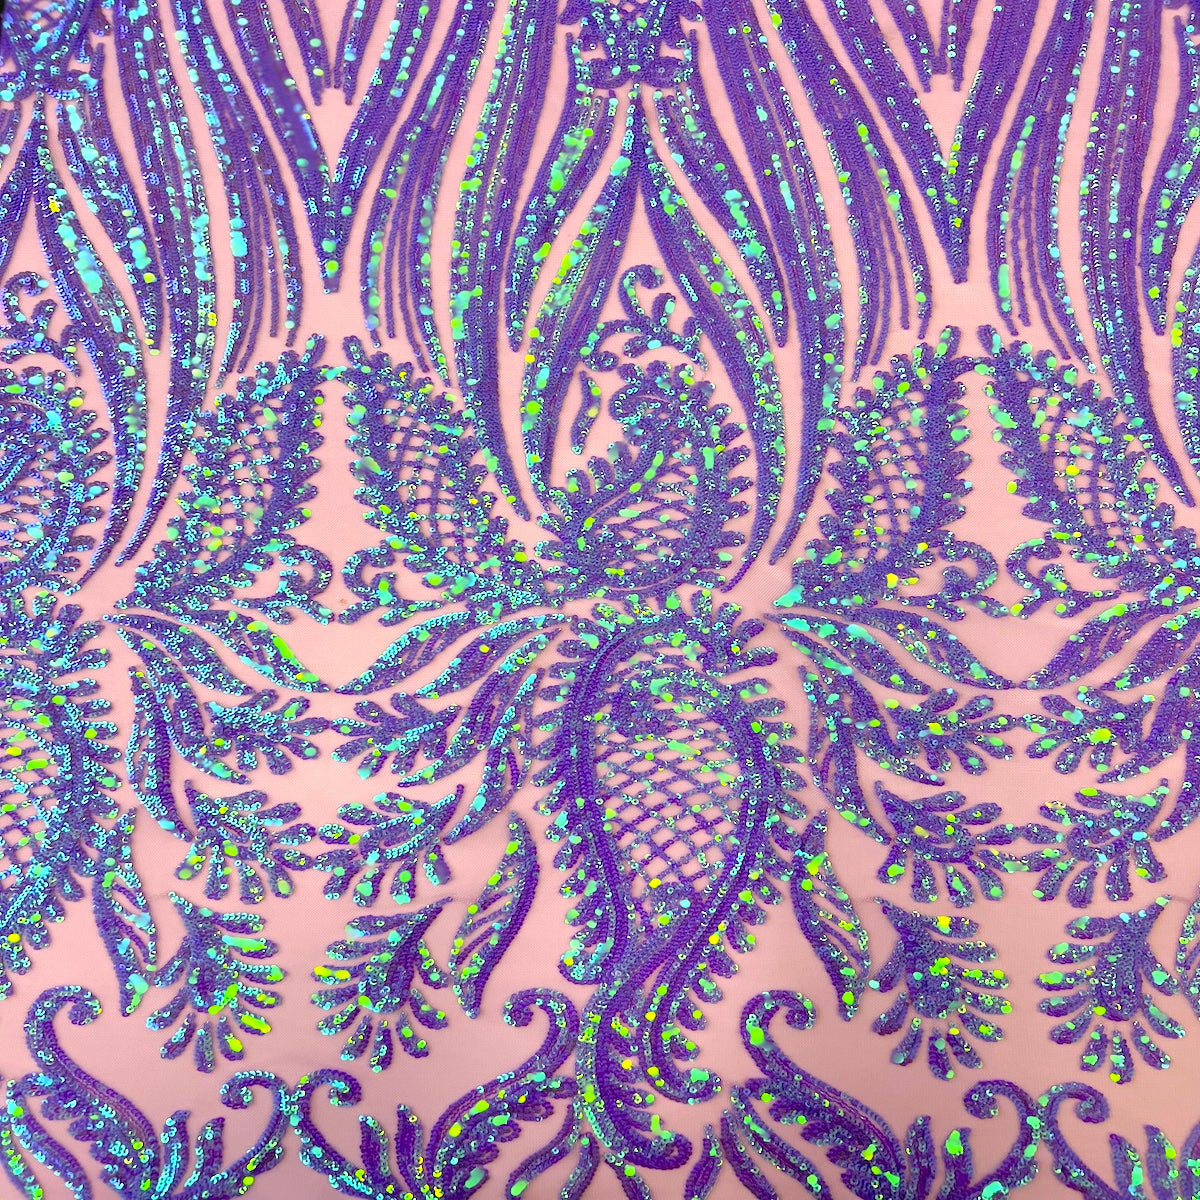 Tela de encaje de lentejuelas elásticas Nebill iridiscente lavanda